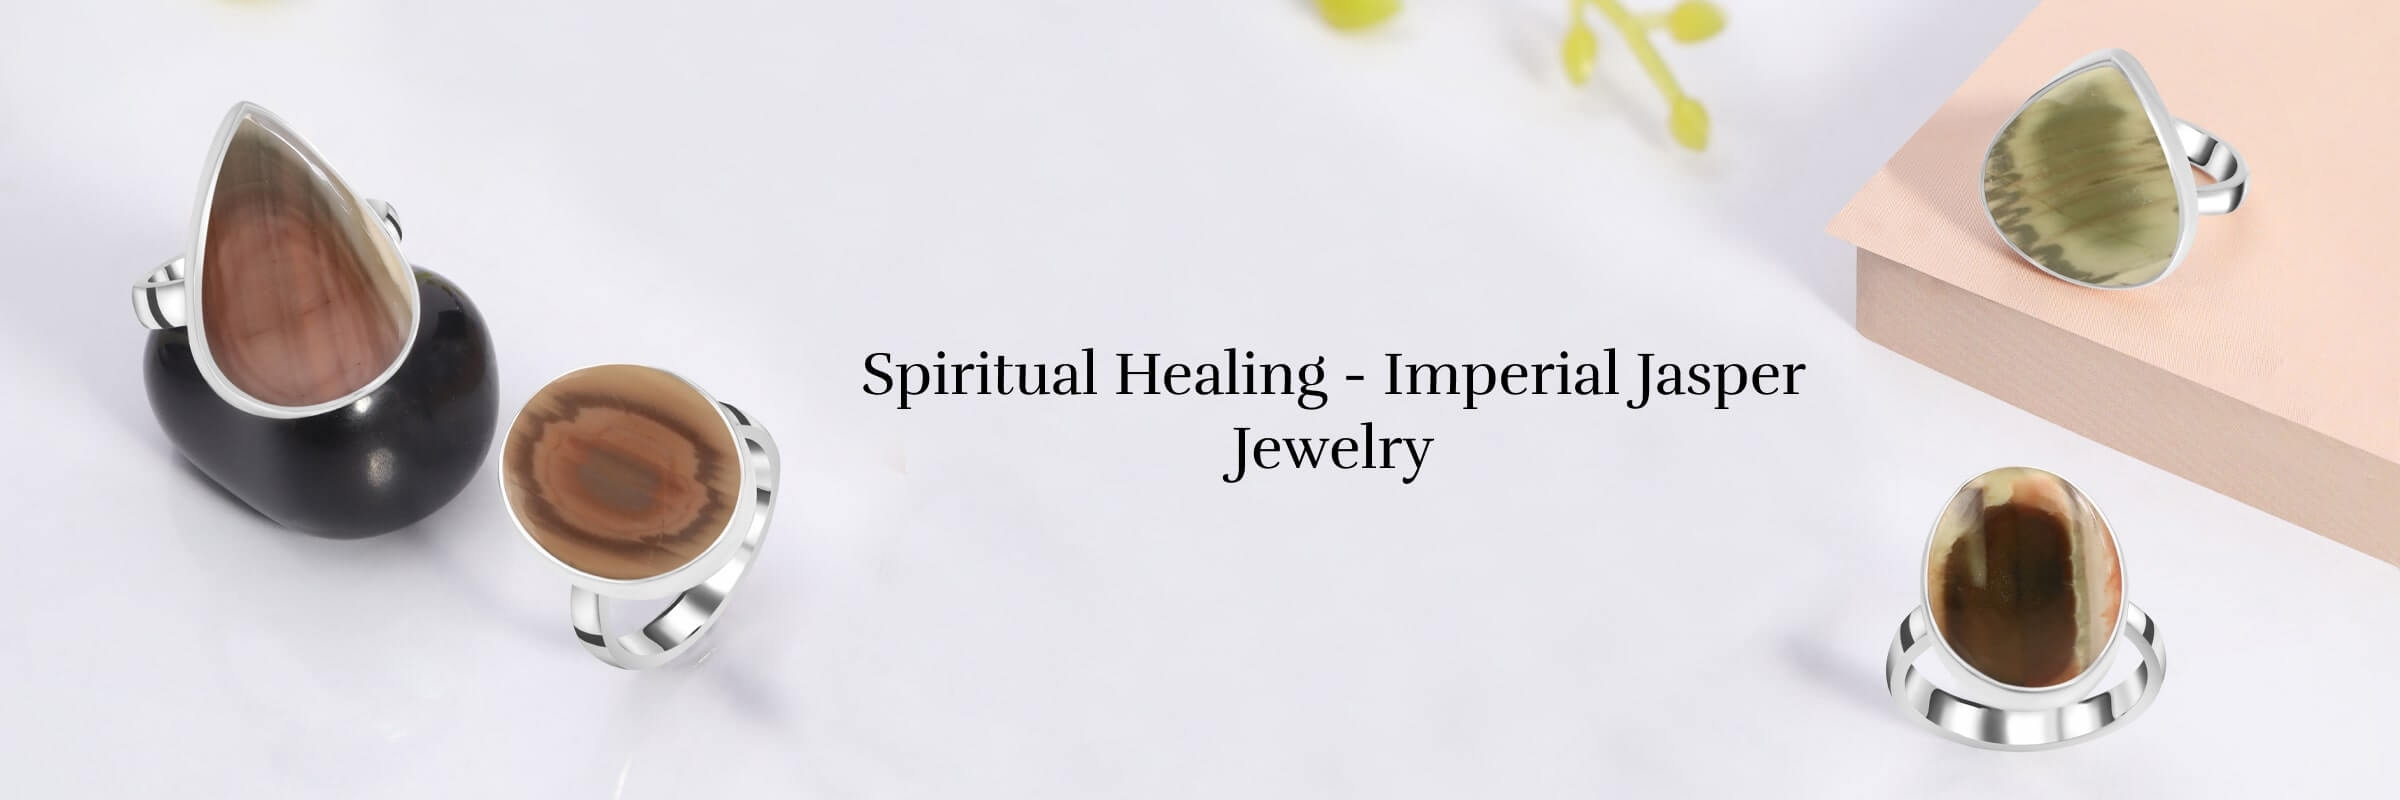 Heal Yourself Emotionally & Spiritually With Imperial Jasper Jewelry